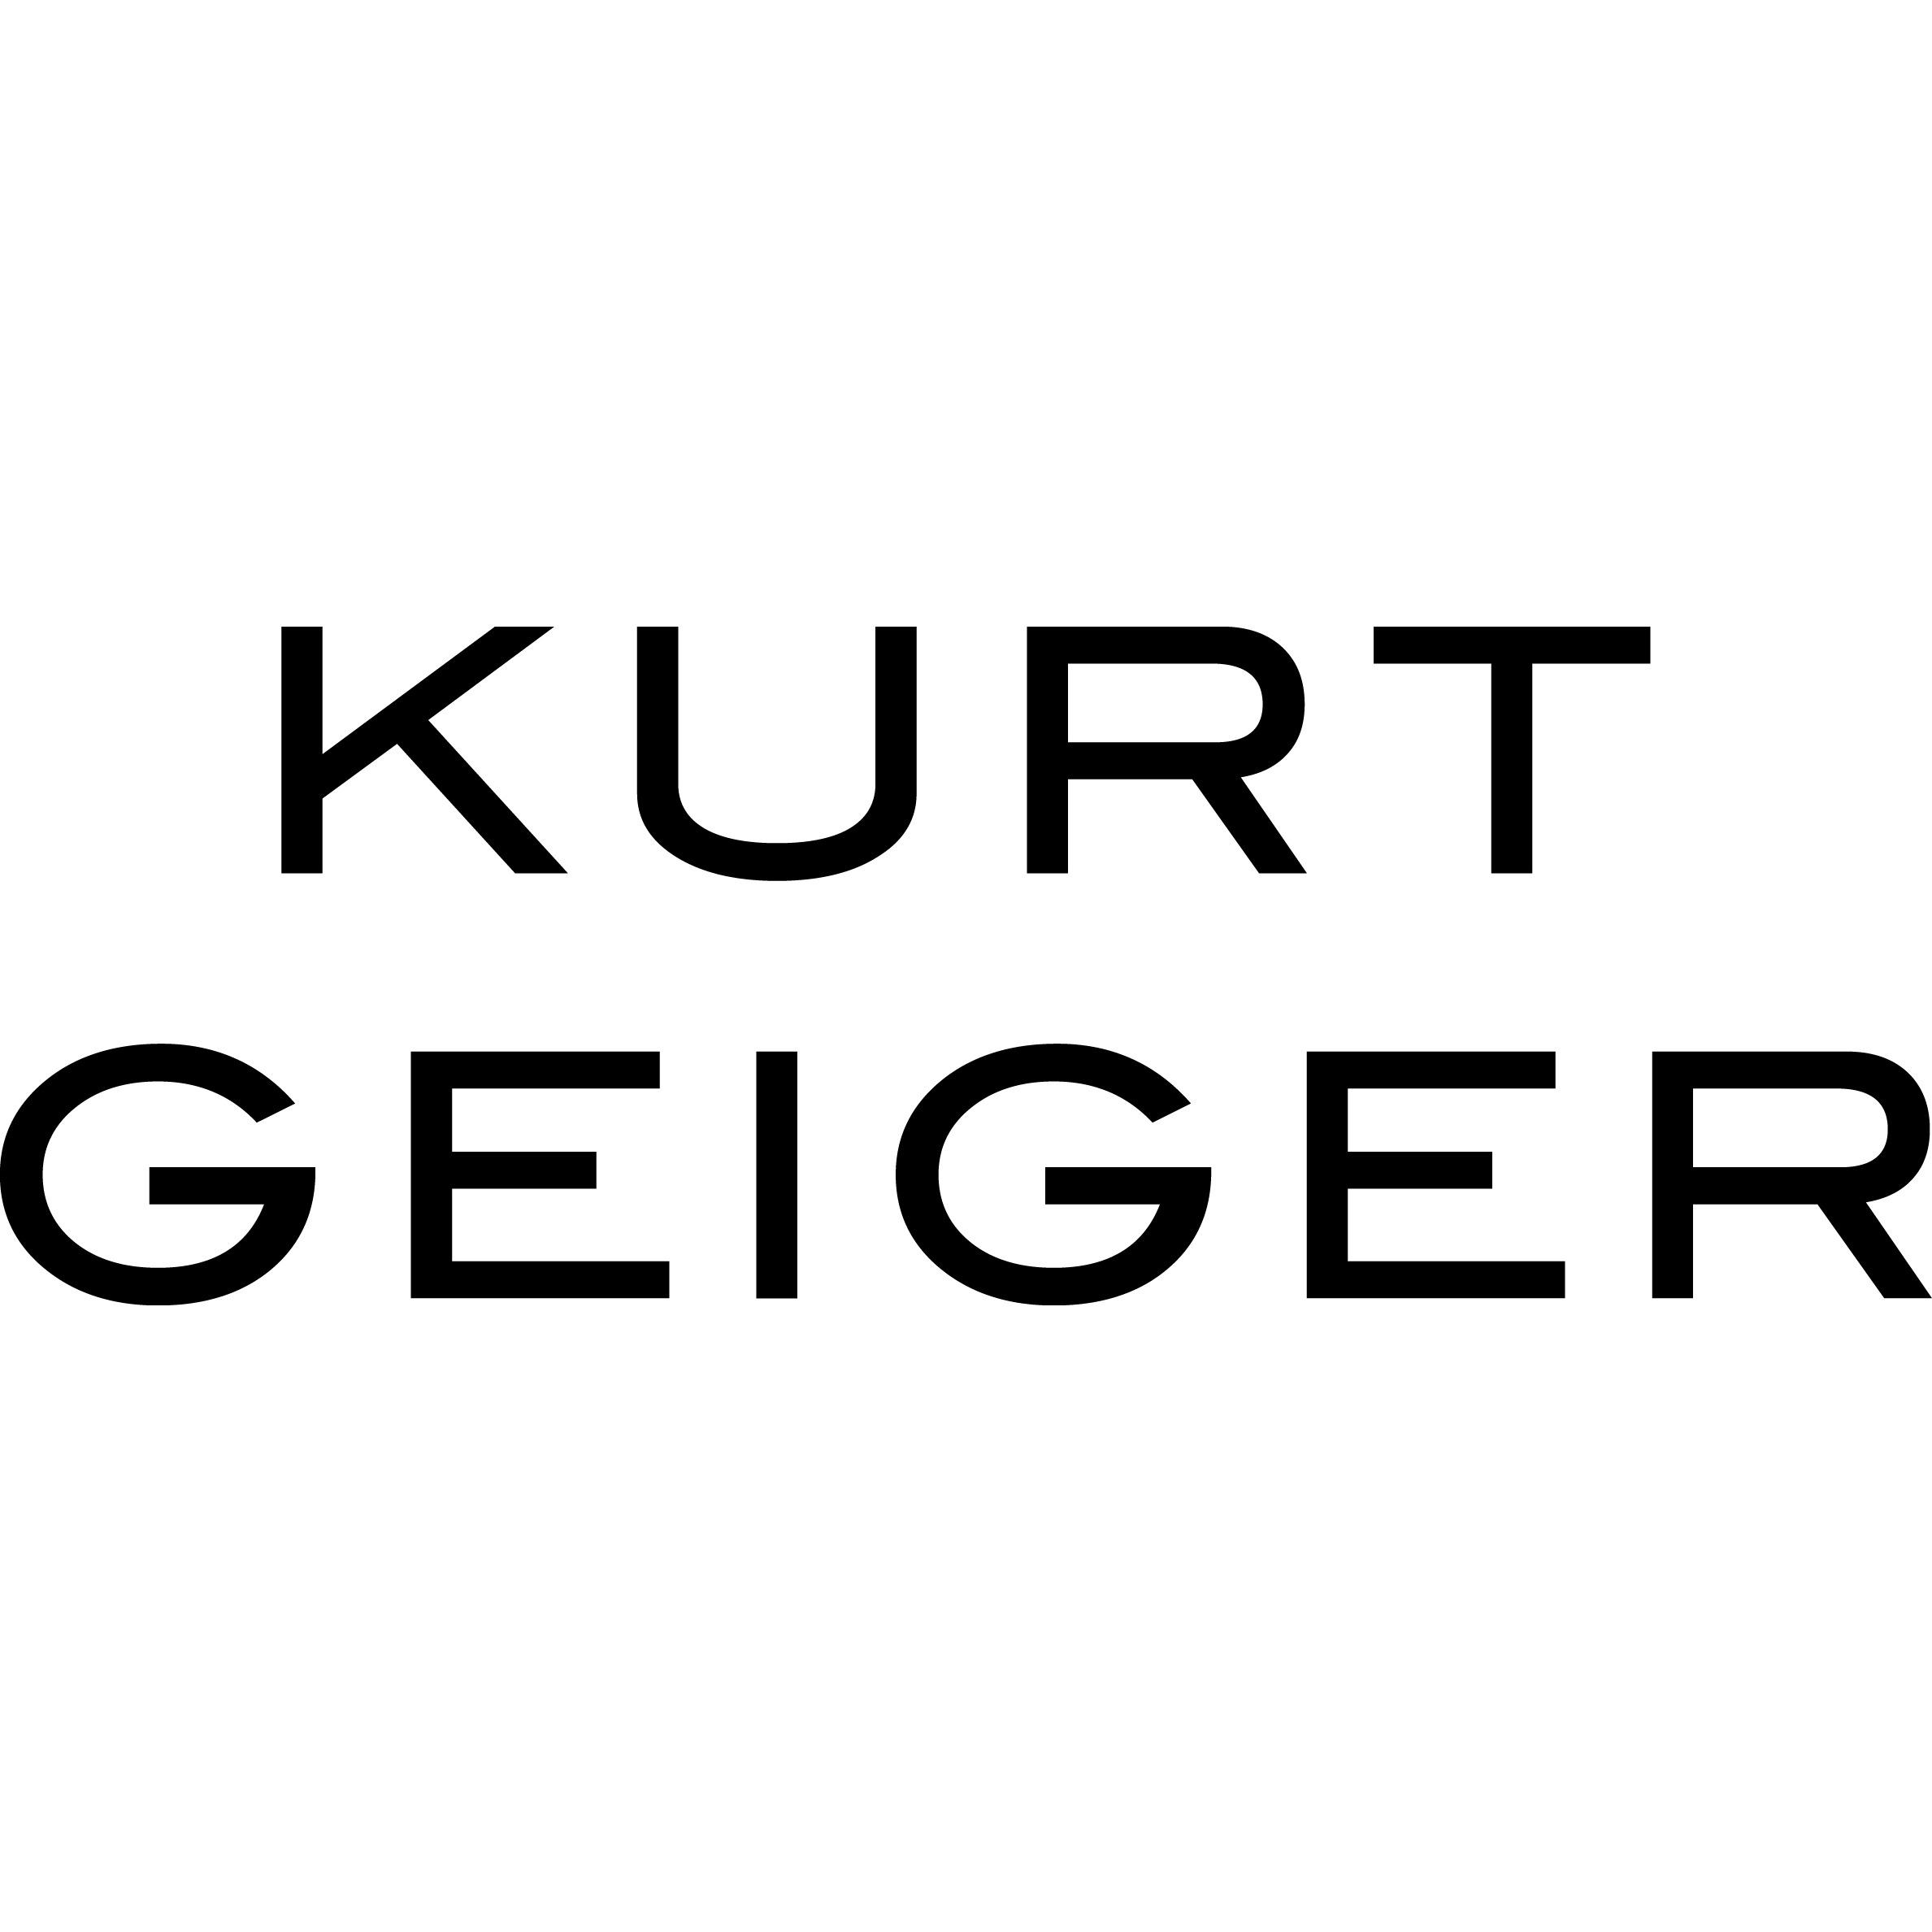 Kurt Geiger Heathrow T3 - Hounslow, London TW6 1QG - 03330 340304 | ShowMeLocal.com